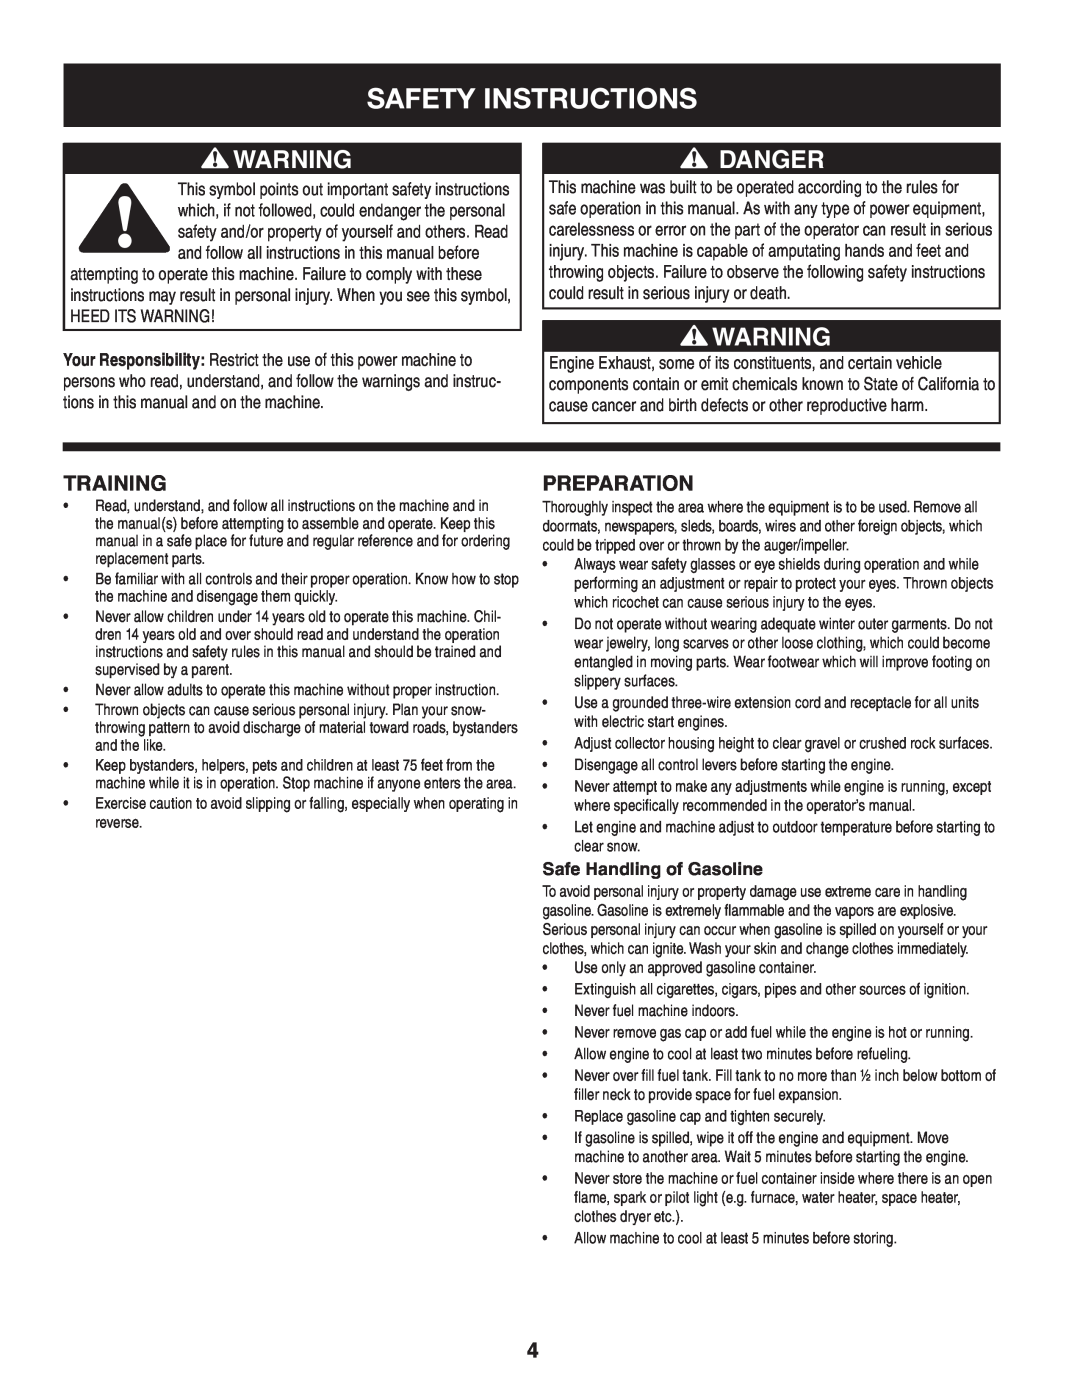 Sears 247.8879 operating instructions Safety Instructions, Danger, Training, Preparation, Safe Handling of Gasoline 